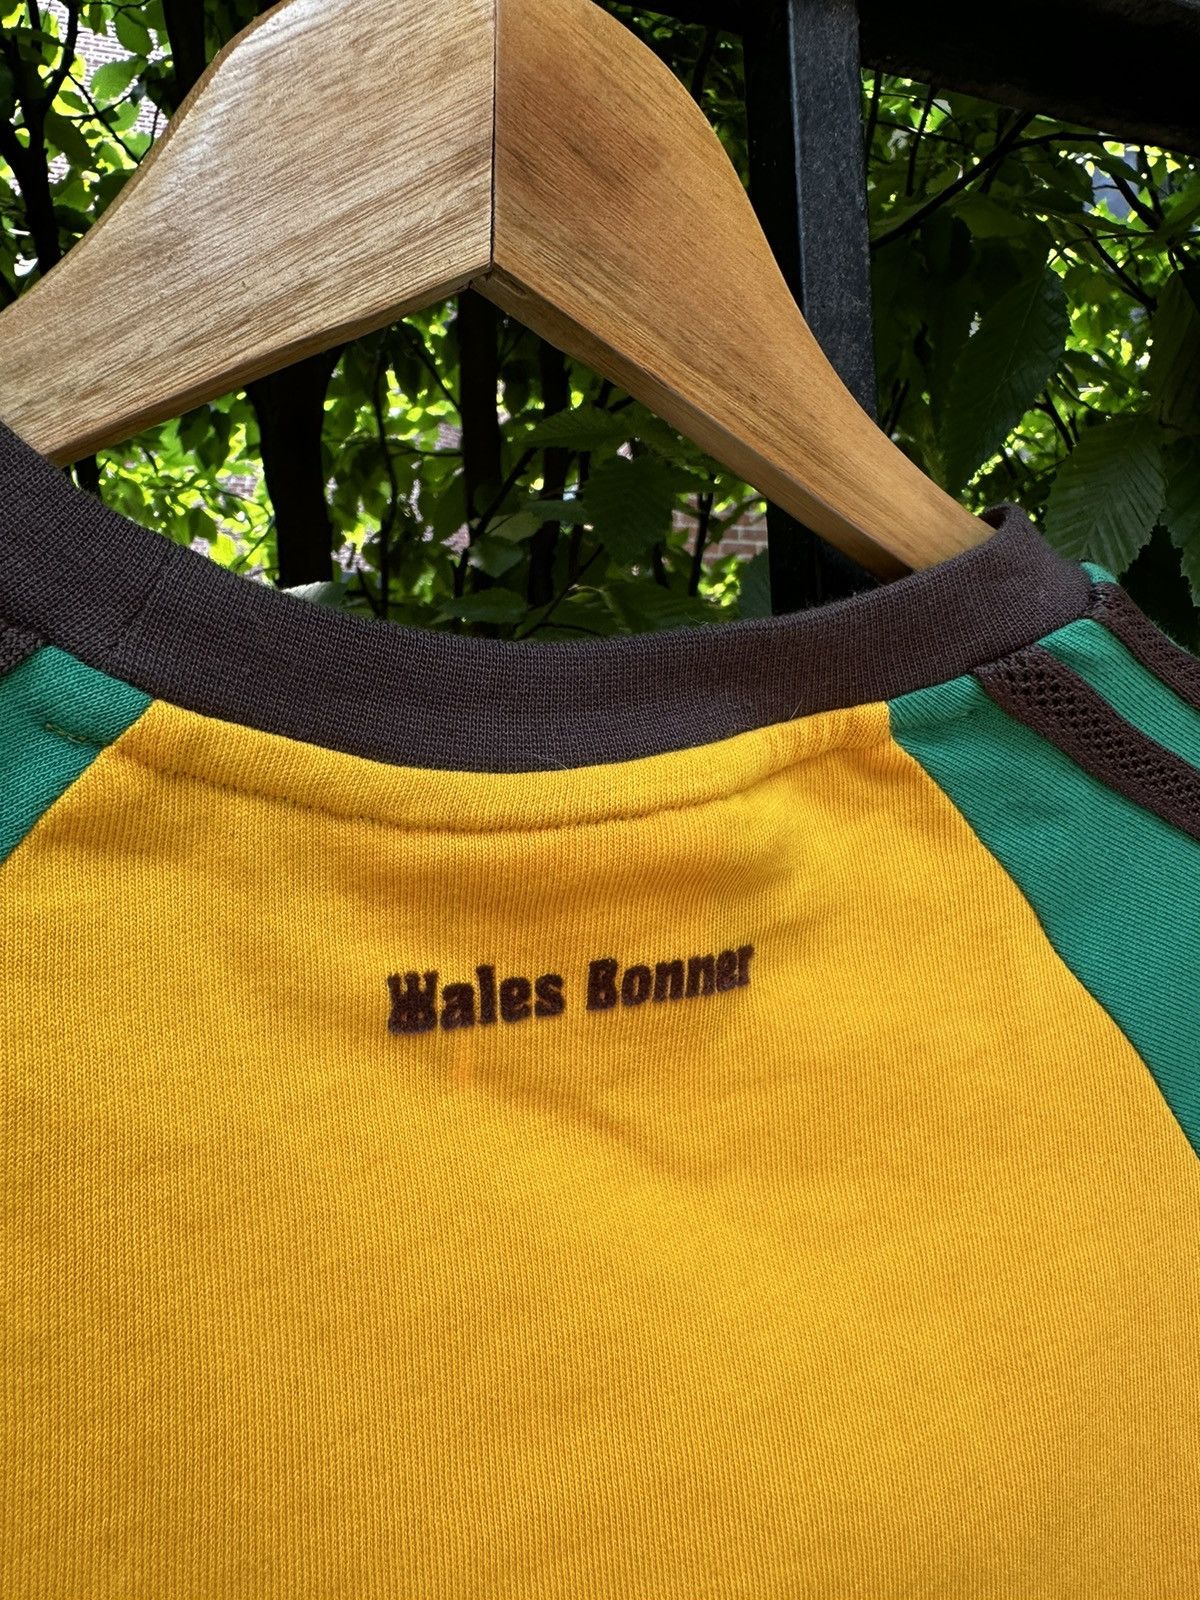 Adidas Wales Bonner X Adidas Short Sleeve T Shirt Size US M / EU 48-50 / 2 - 3 Thumbnail